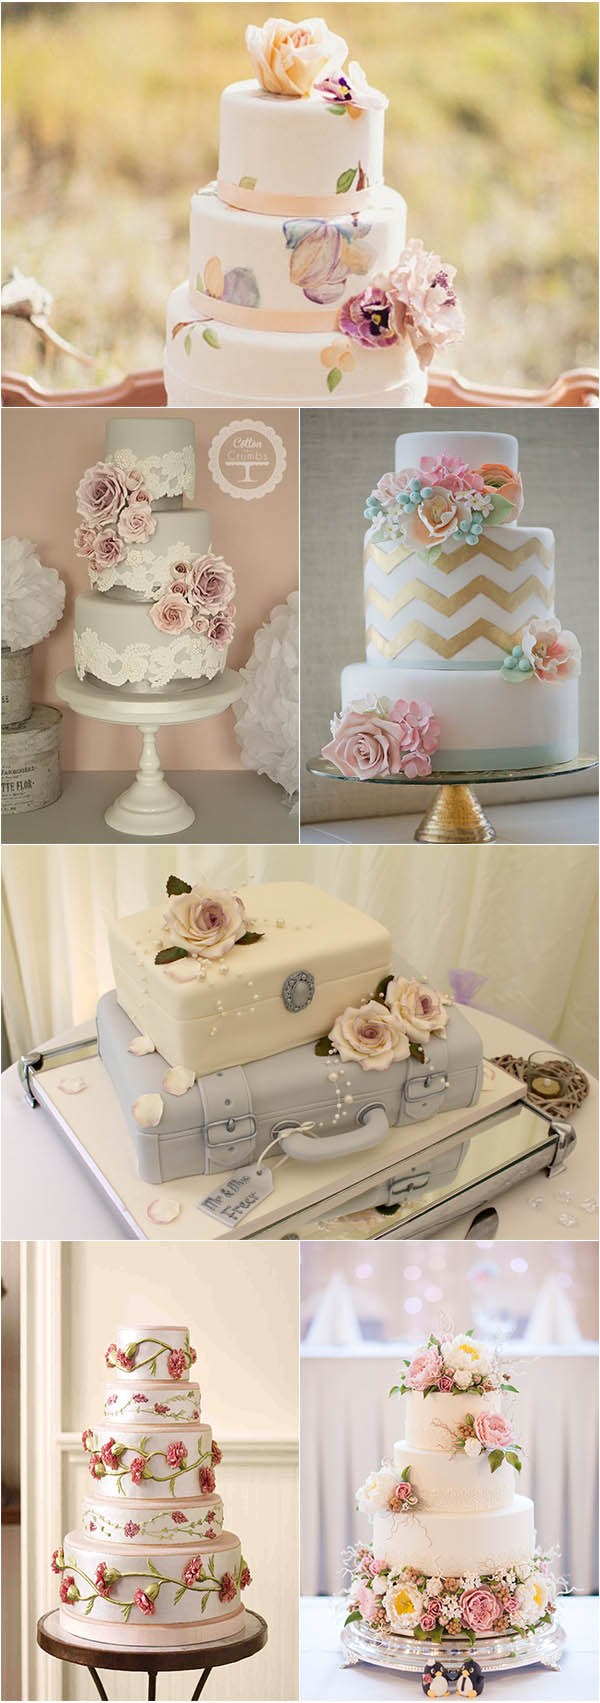 rustic and romantic vintage wedding cake ideas